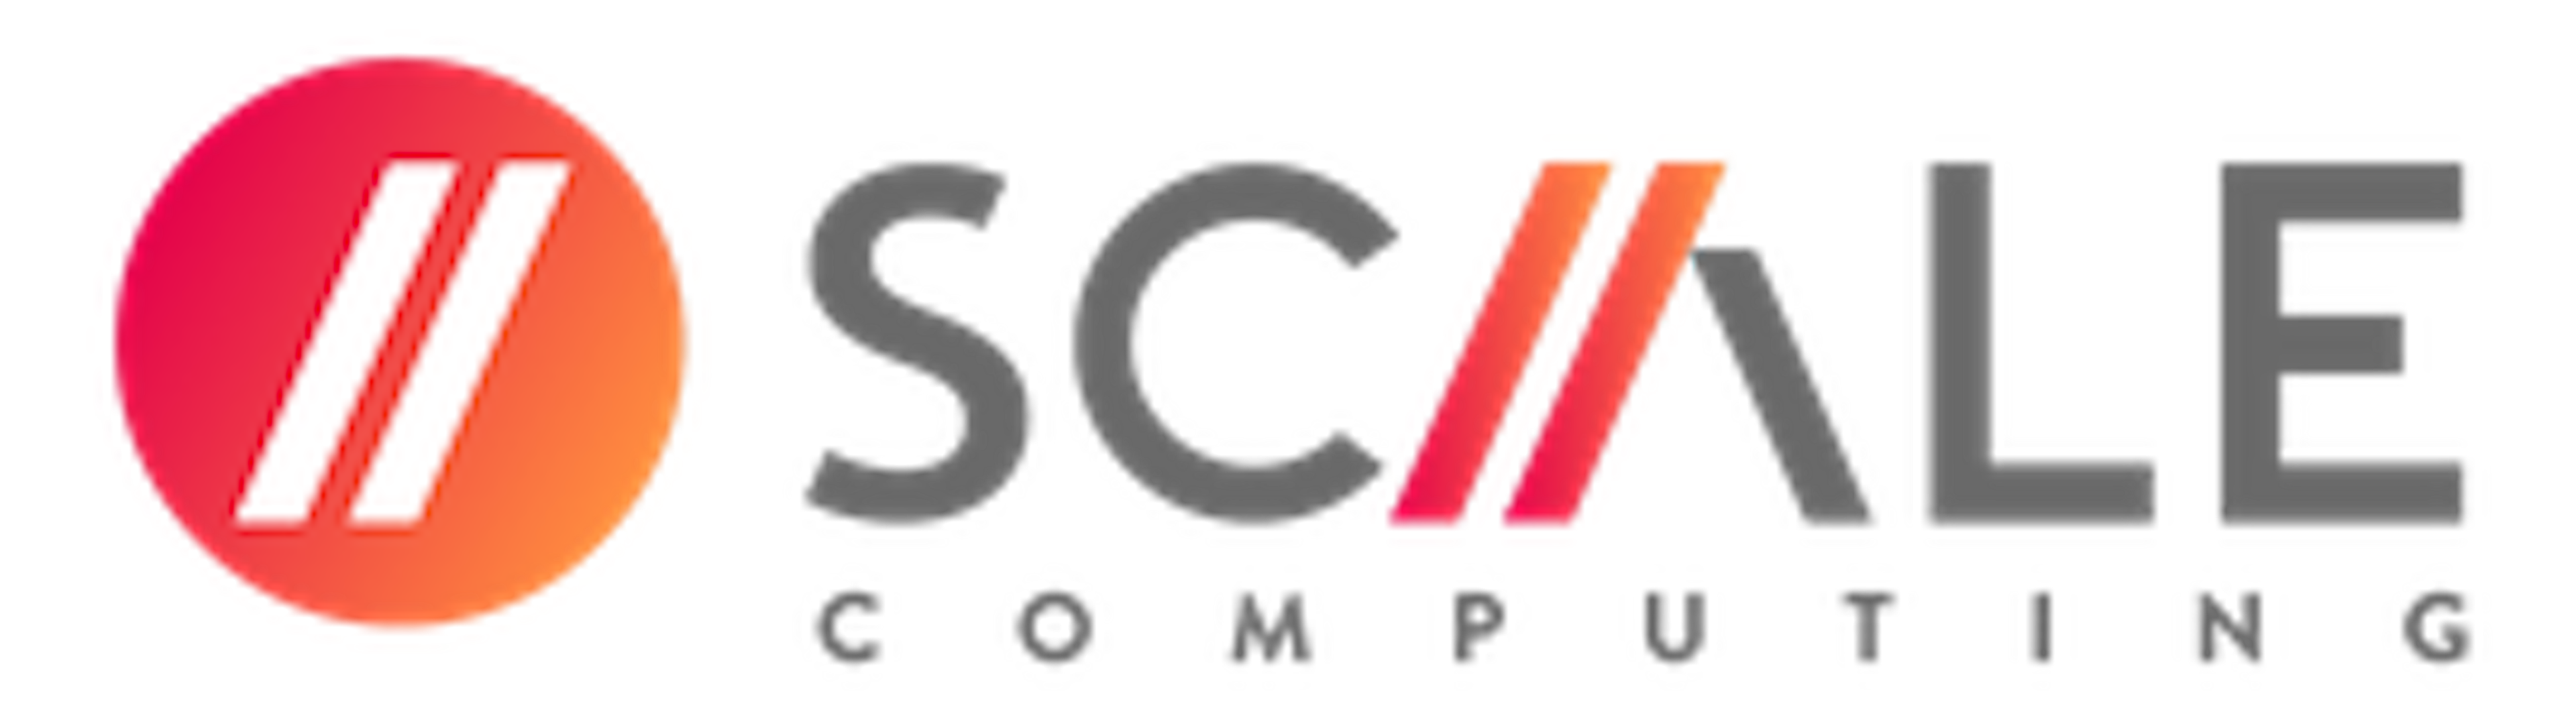 Scale Computing Logo